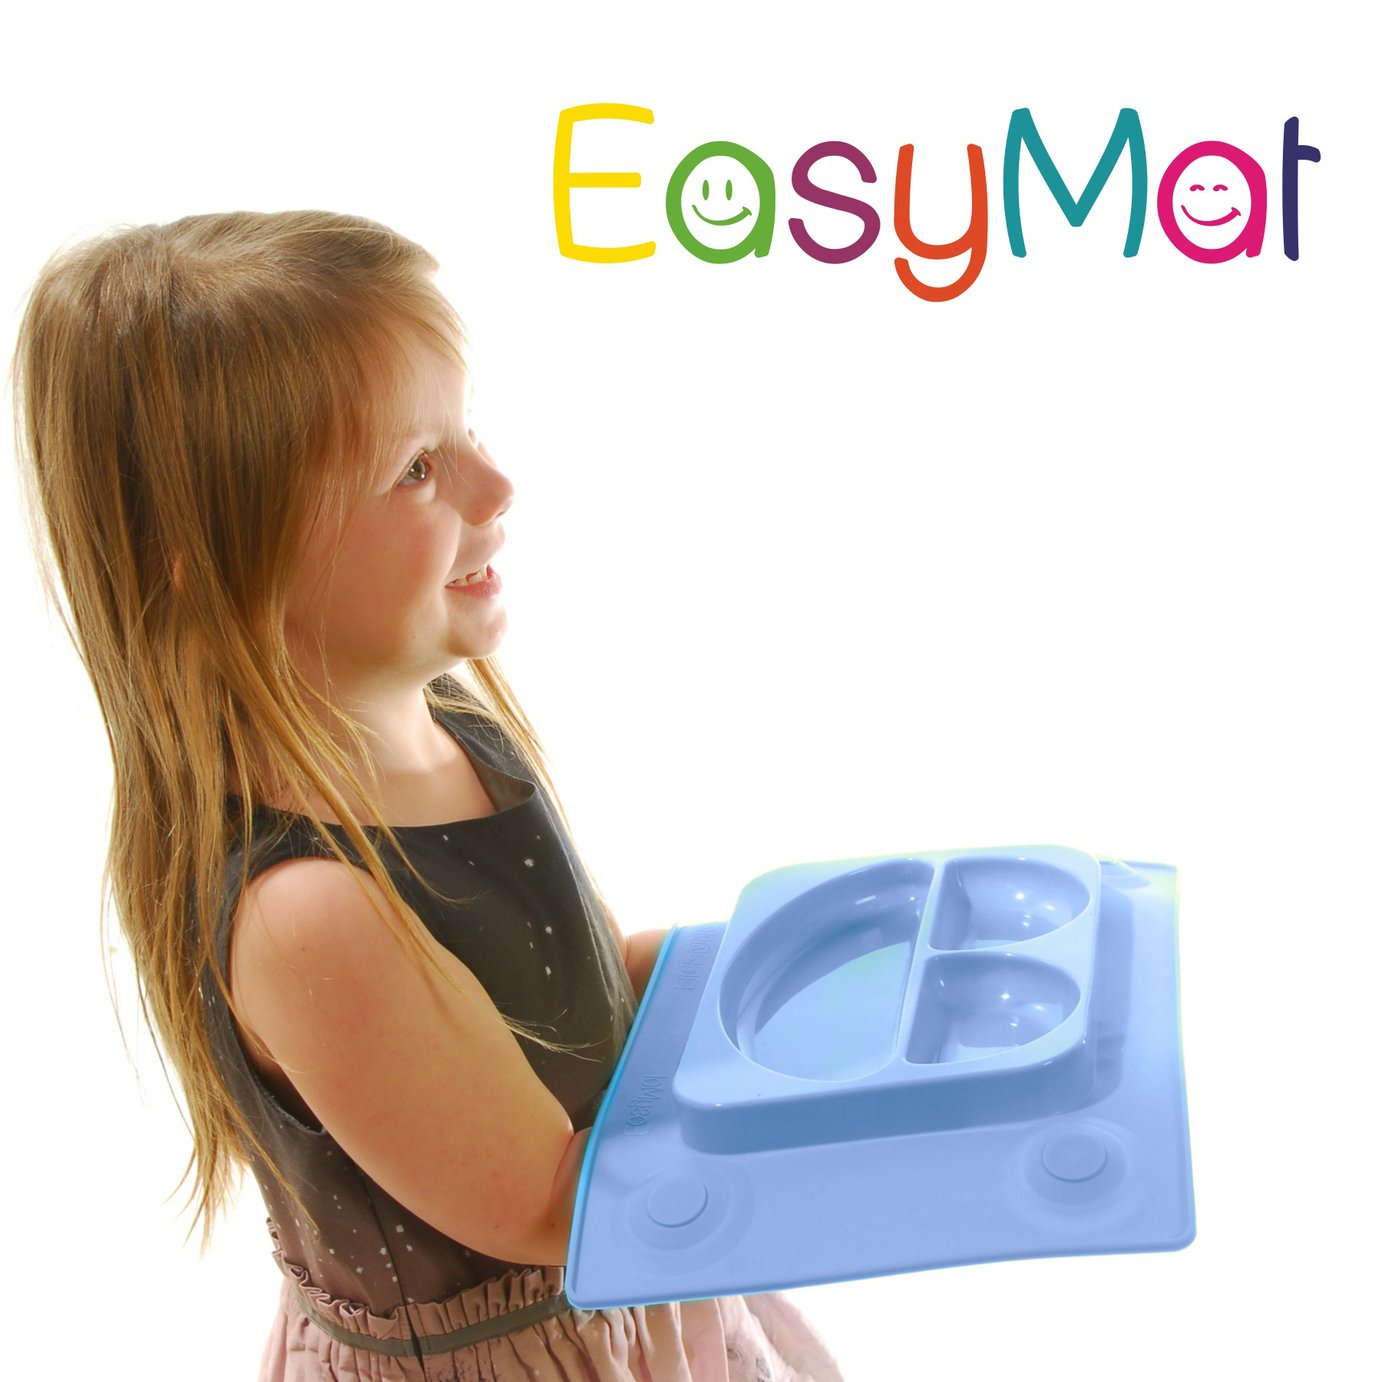 Easytots EasyMat Review